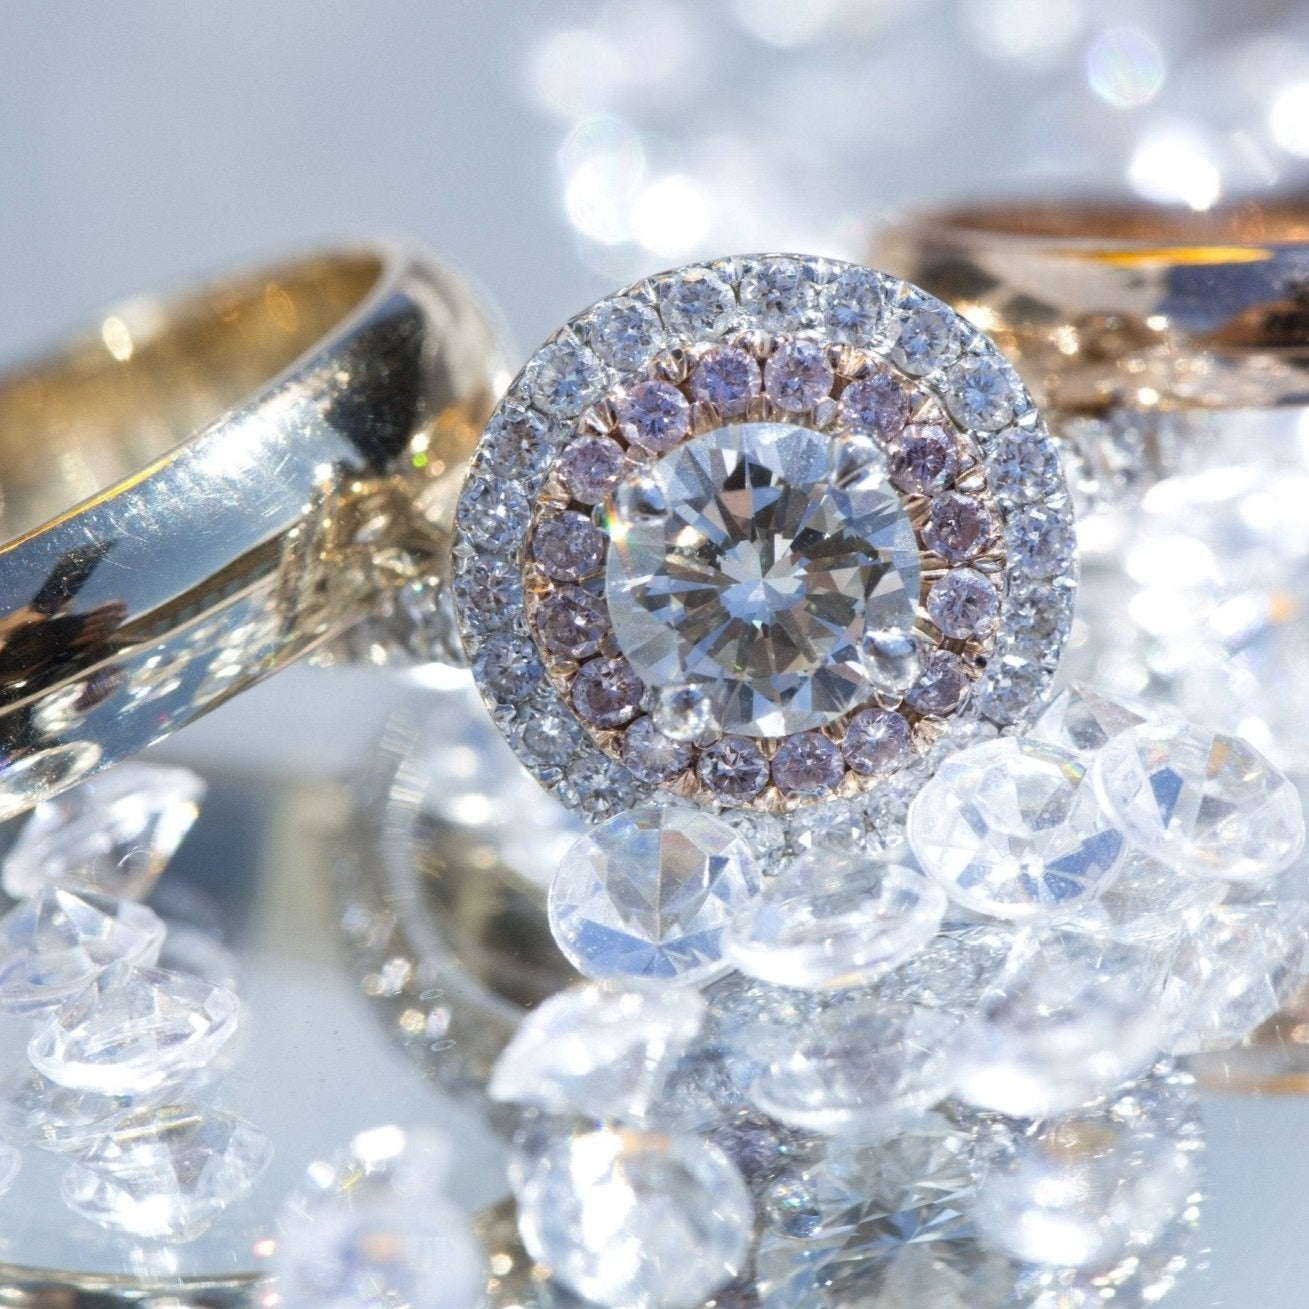 Customize Your Dream Ring-Black Diamonds New York